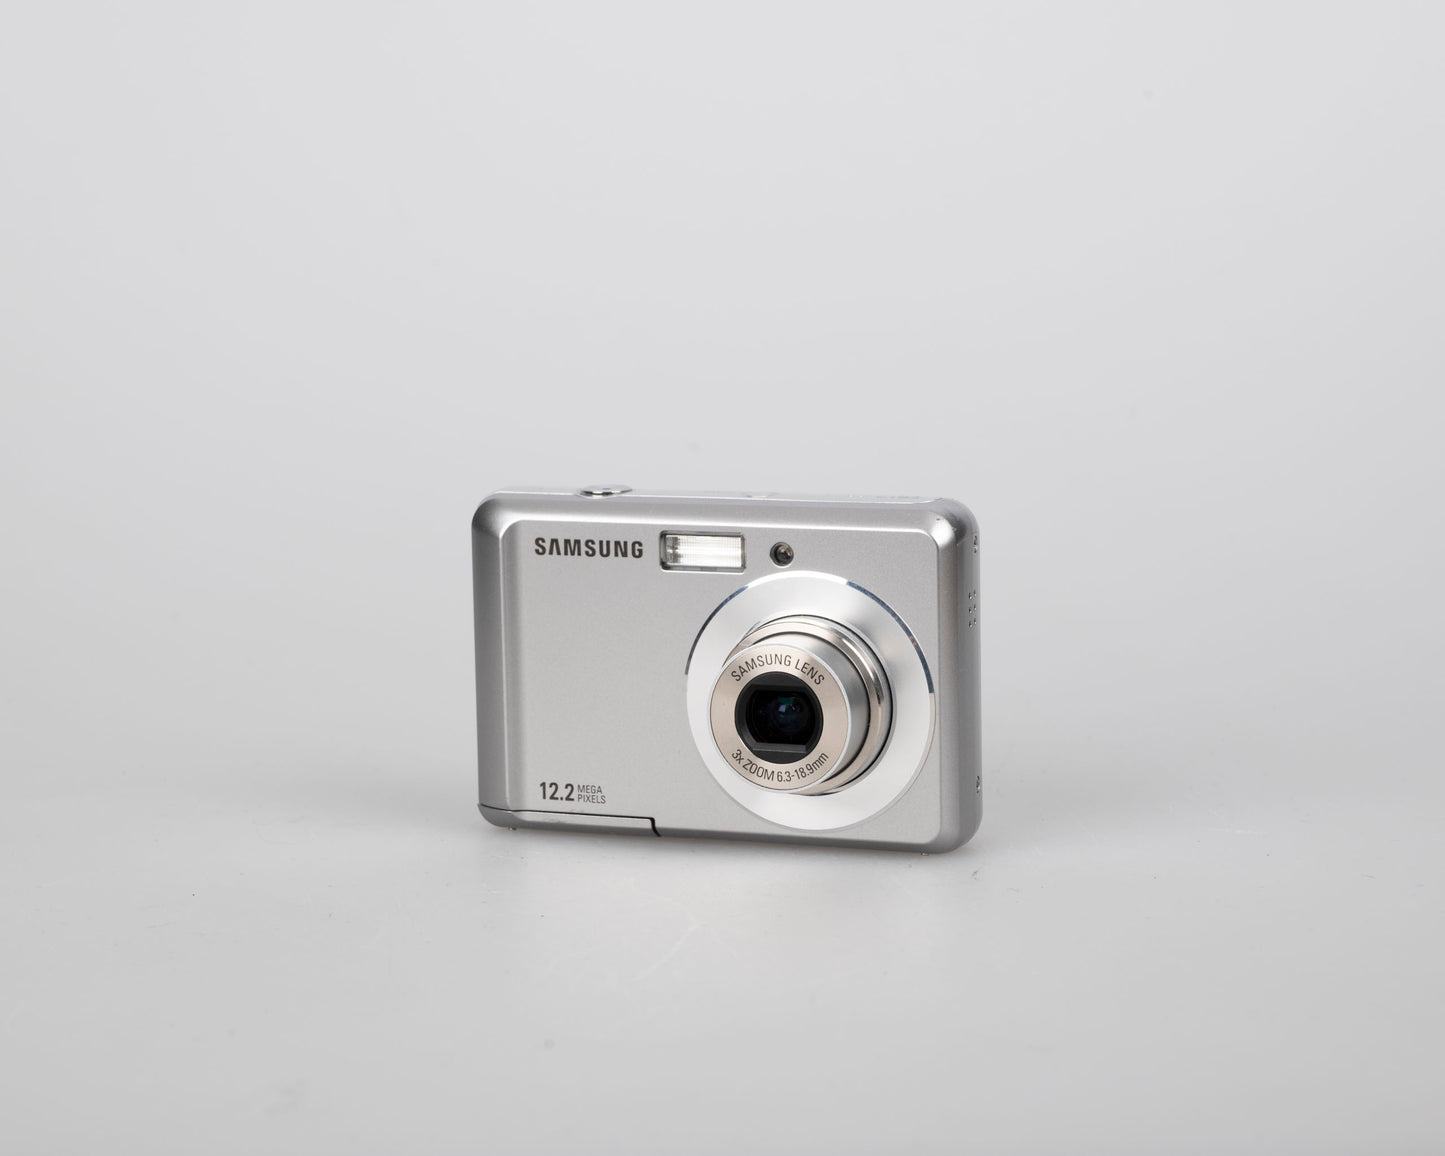 Samsung ES17 12.2 MP CCD sensor digicam (uses AA batteries + SD cards)